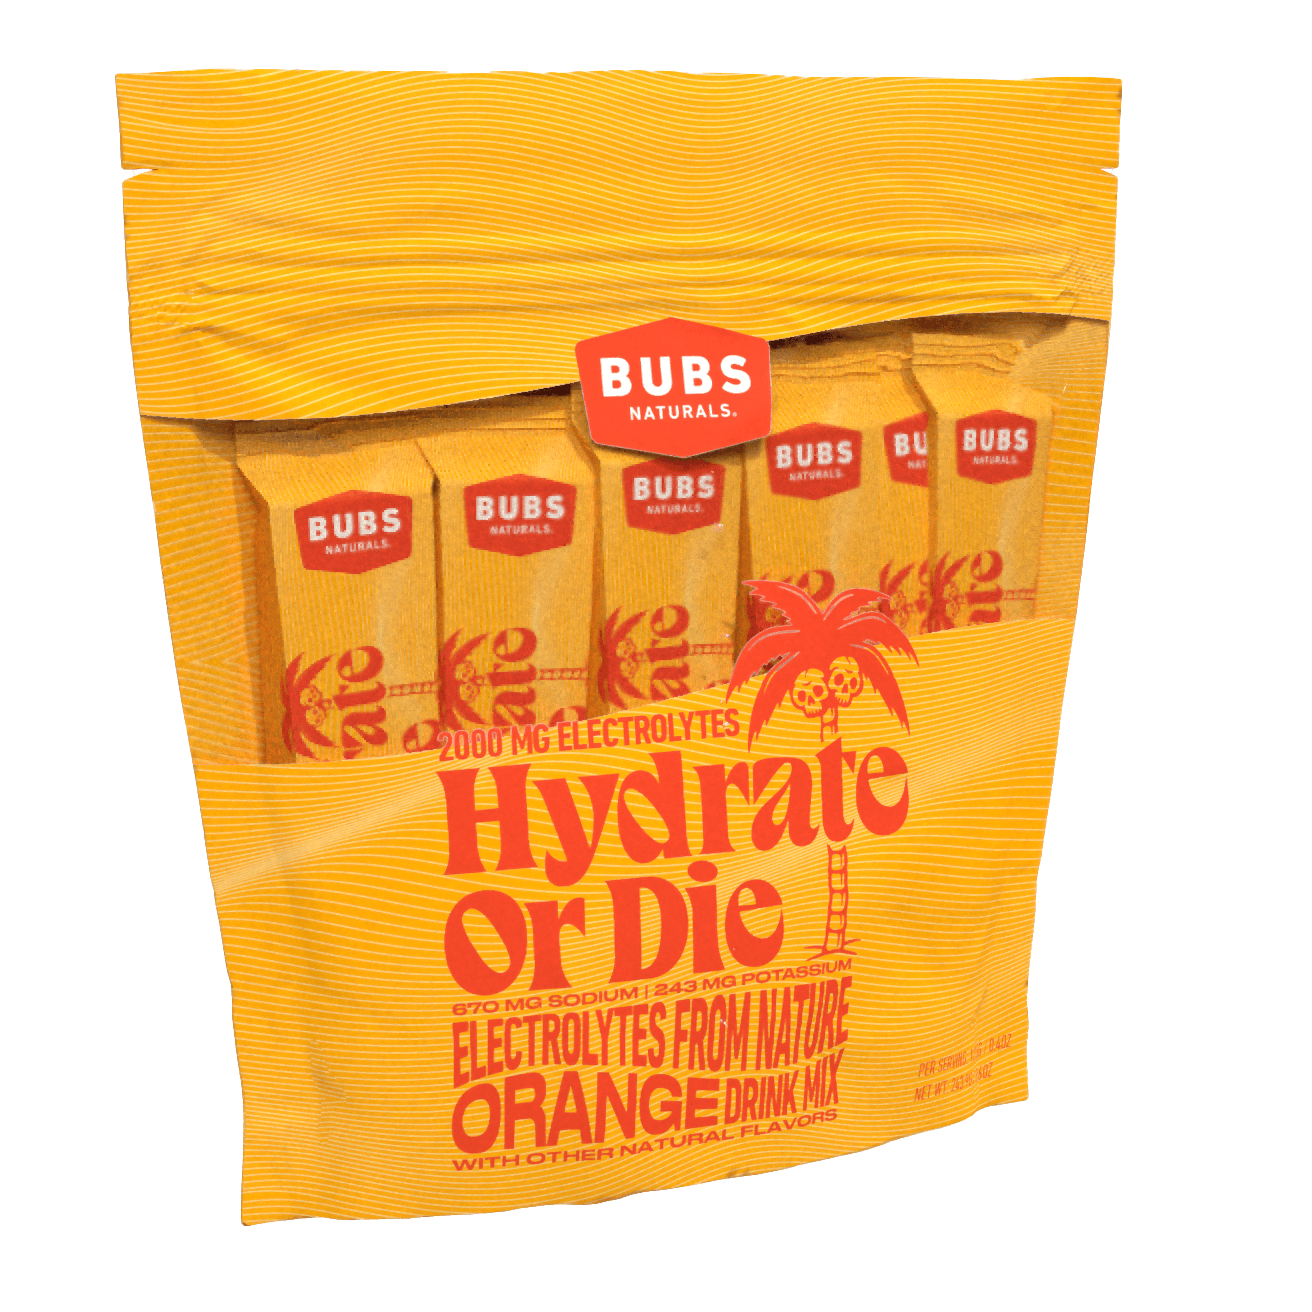 BUBS Naturals Hydrate or Die, 18 count bag,  Natural Electrolytes, Orange, Front left